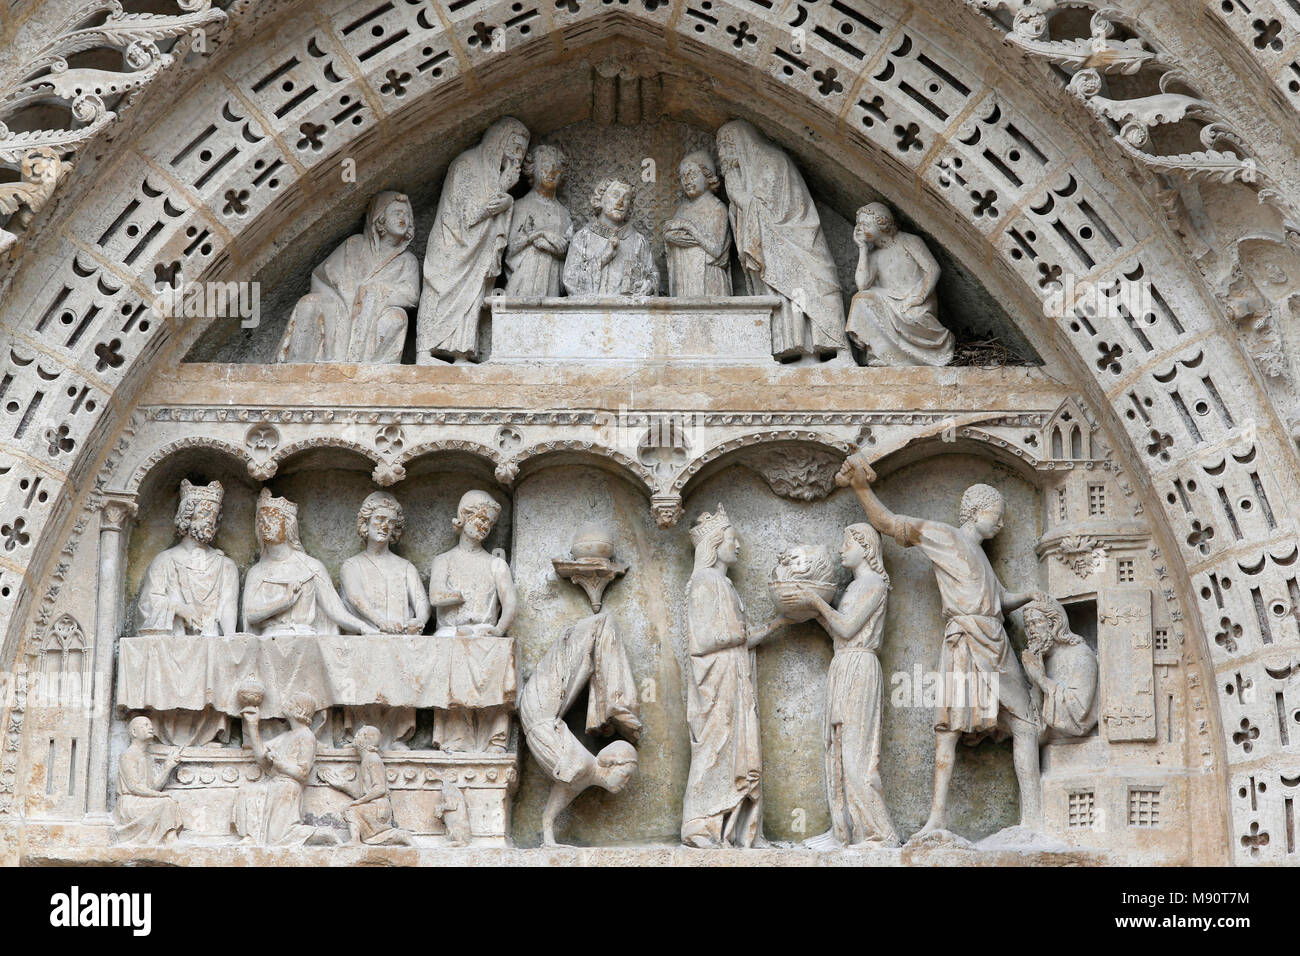 La catedral de Notre-Dame de Rouen, Francia. Tímpano esculpido. Foto de stock